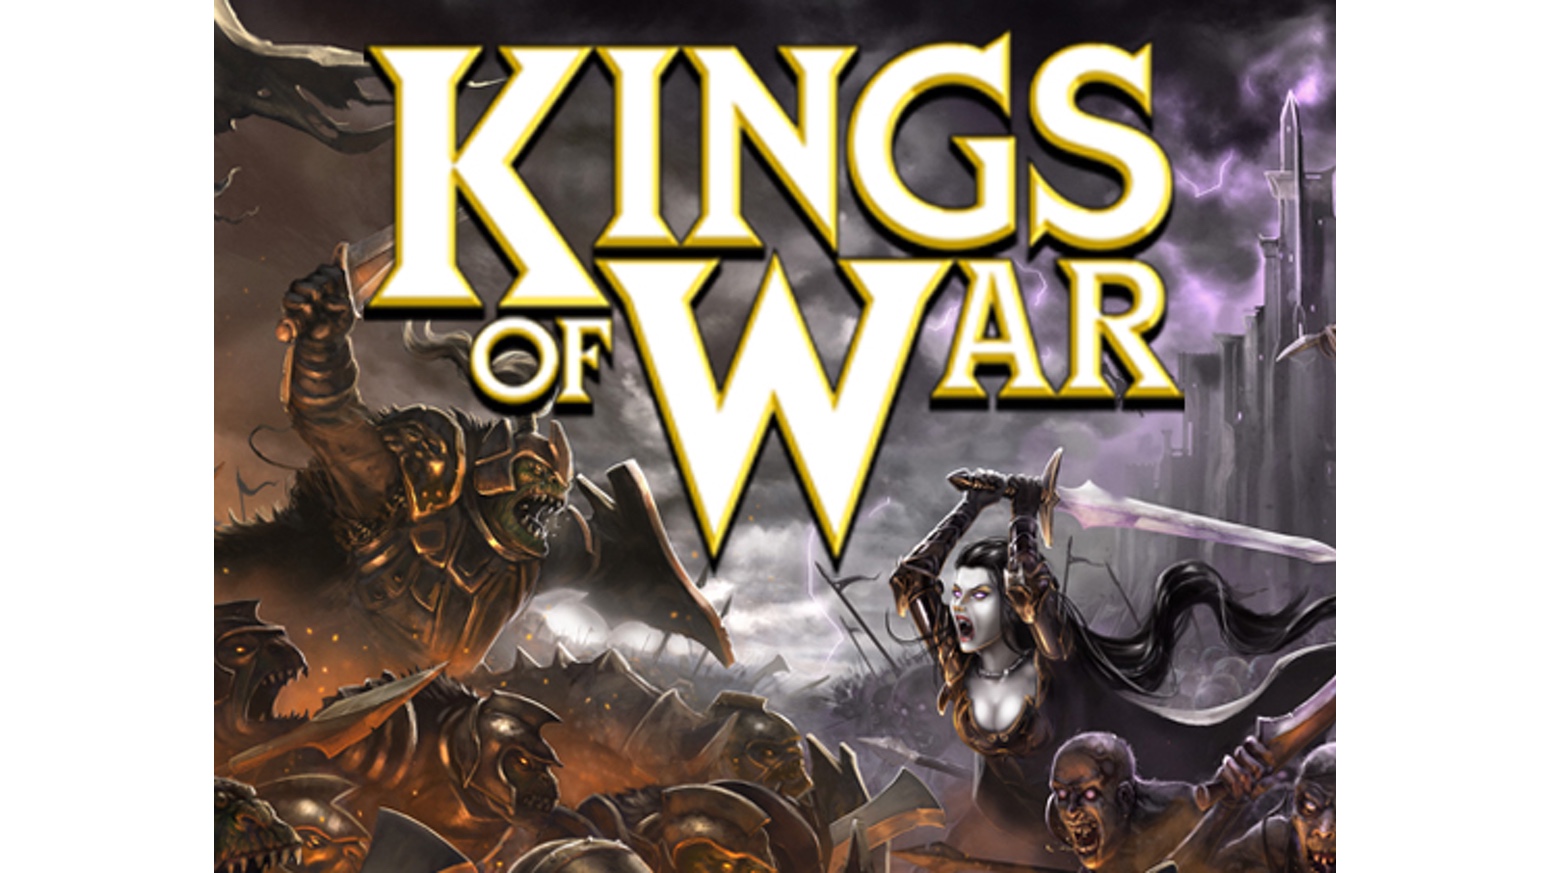 Kings Of War #23